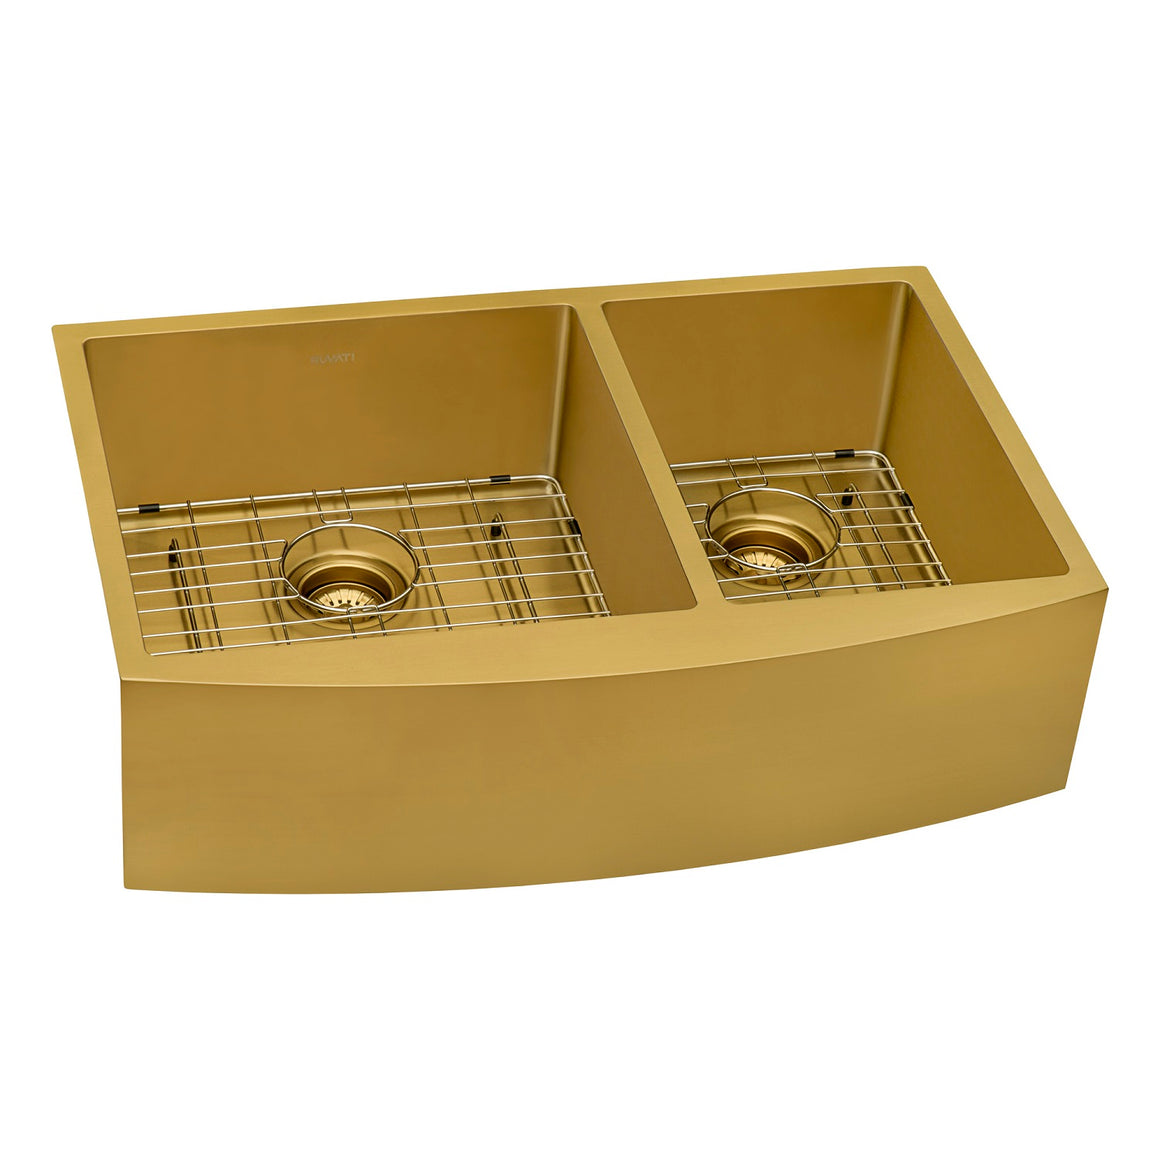 Ruvati 33-inch Satin Brass Matte Gold Stainless Steel 60/40 Double Bowl Apron-Front Farmhouse Kitchen Sink – RVH9742GG